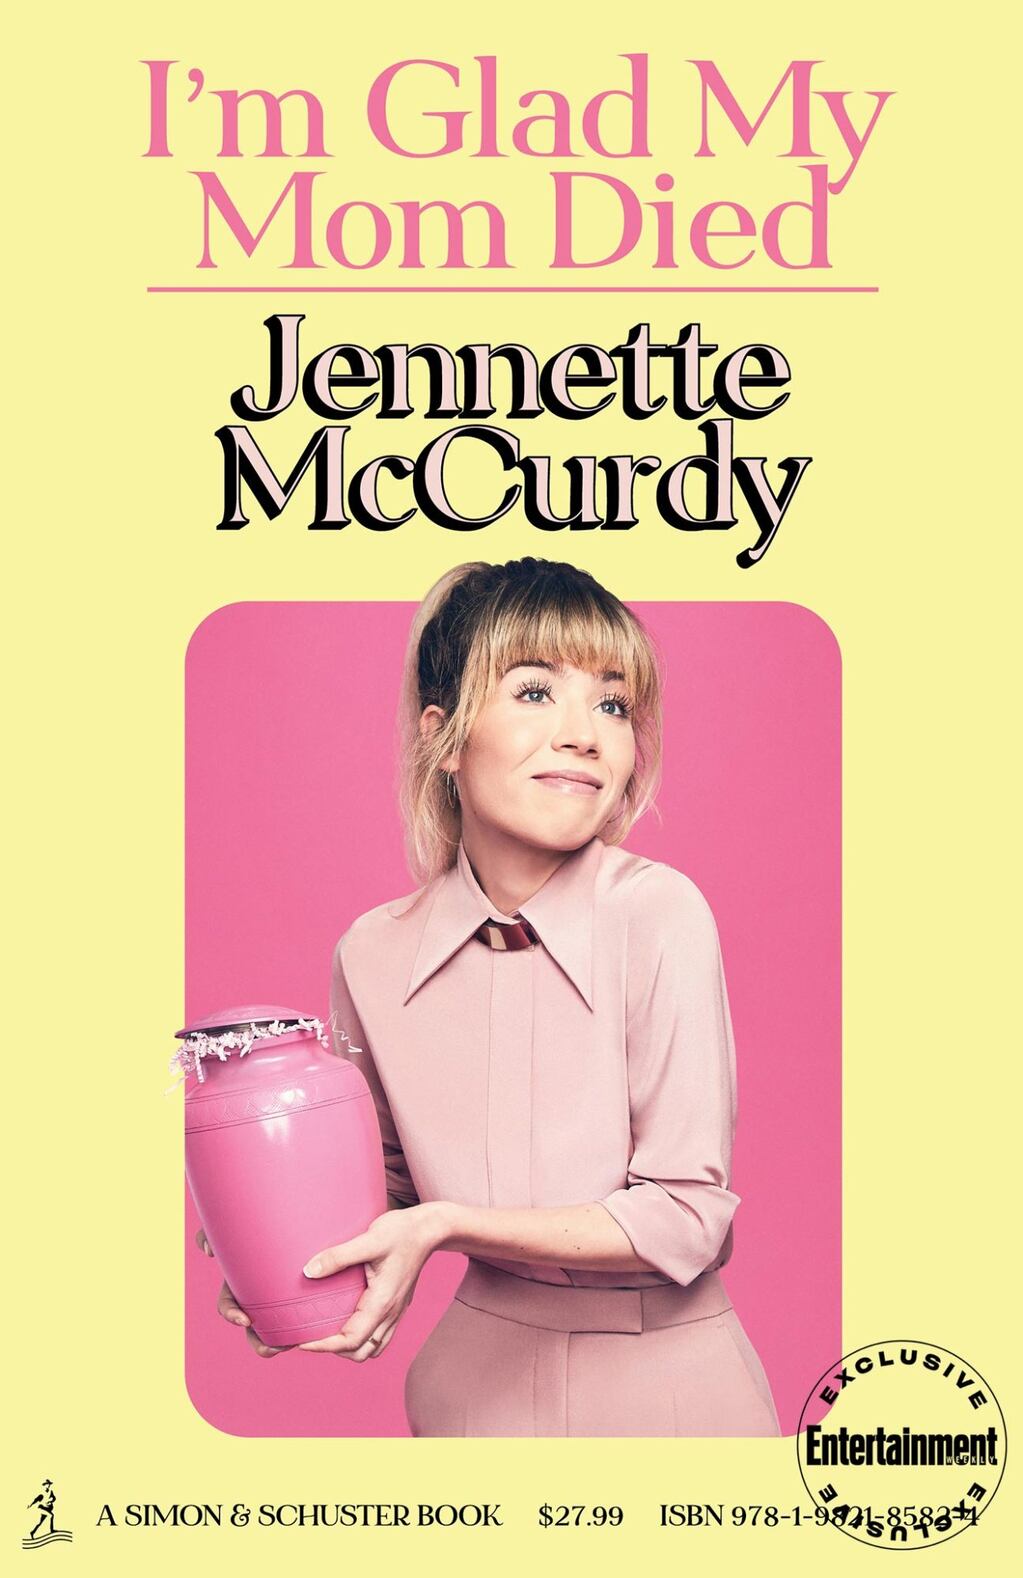 La portada de 'I'm Glad My Mom Died' de Jennette McCurdy